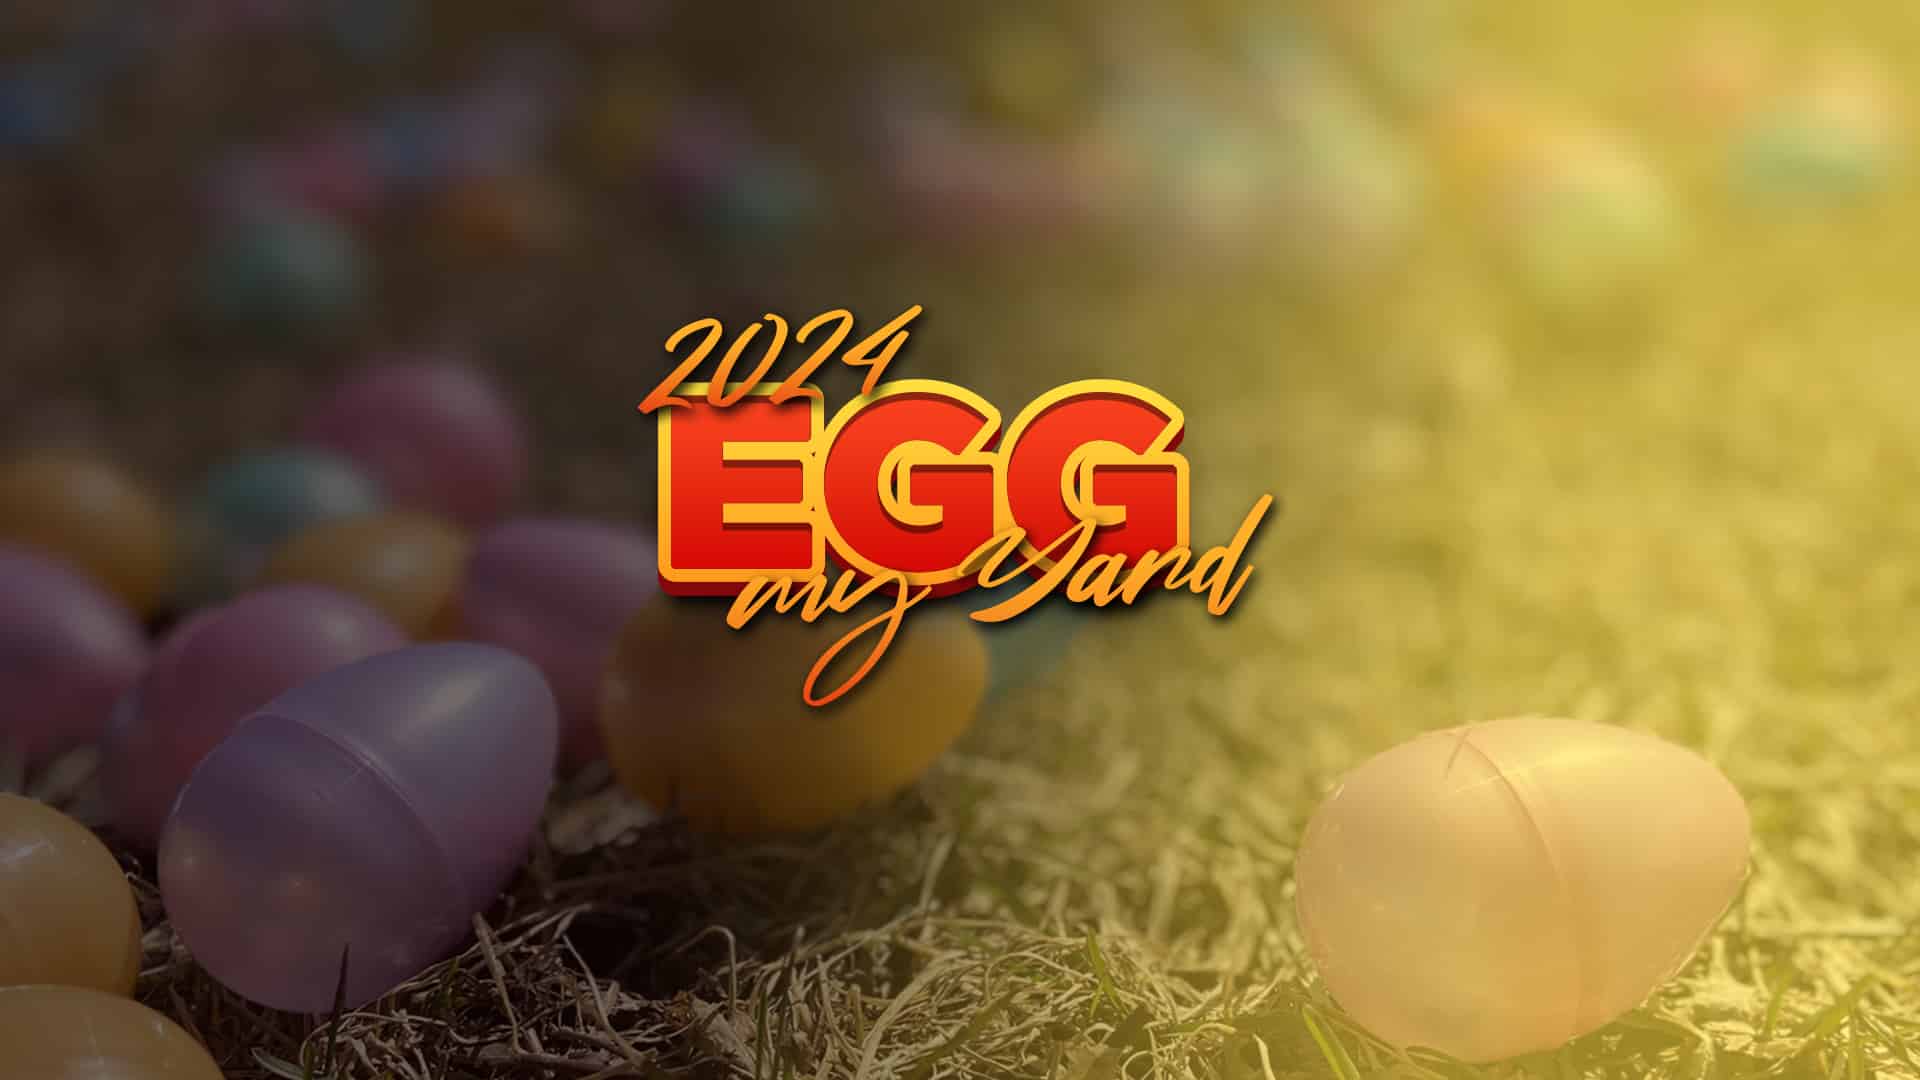 egg my yard